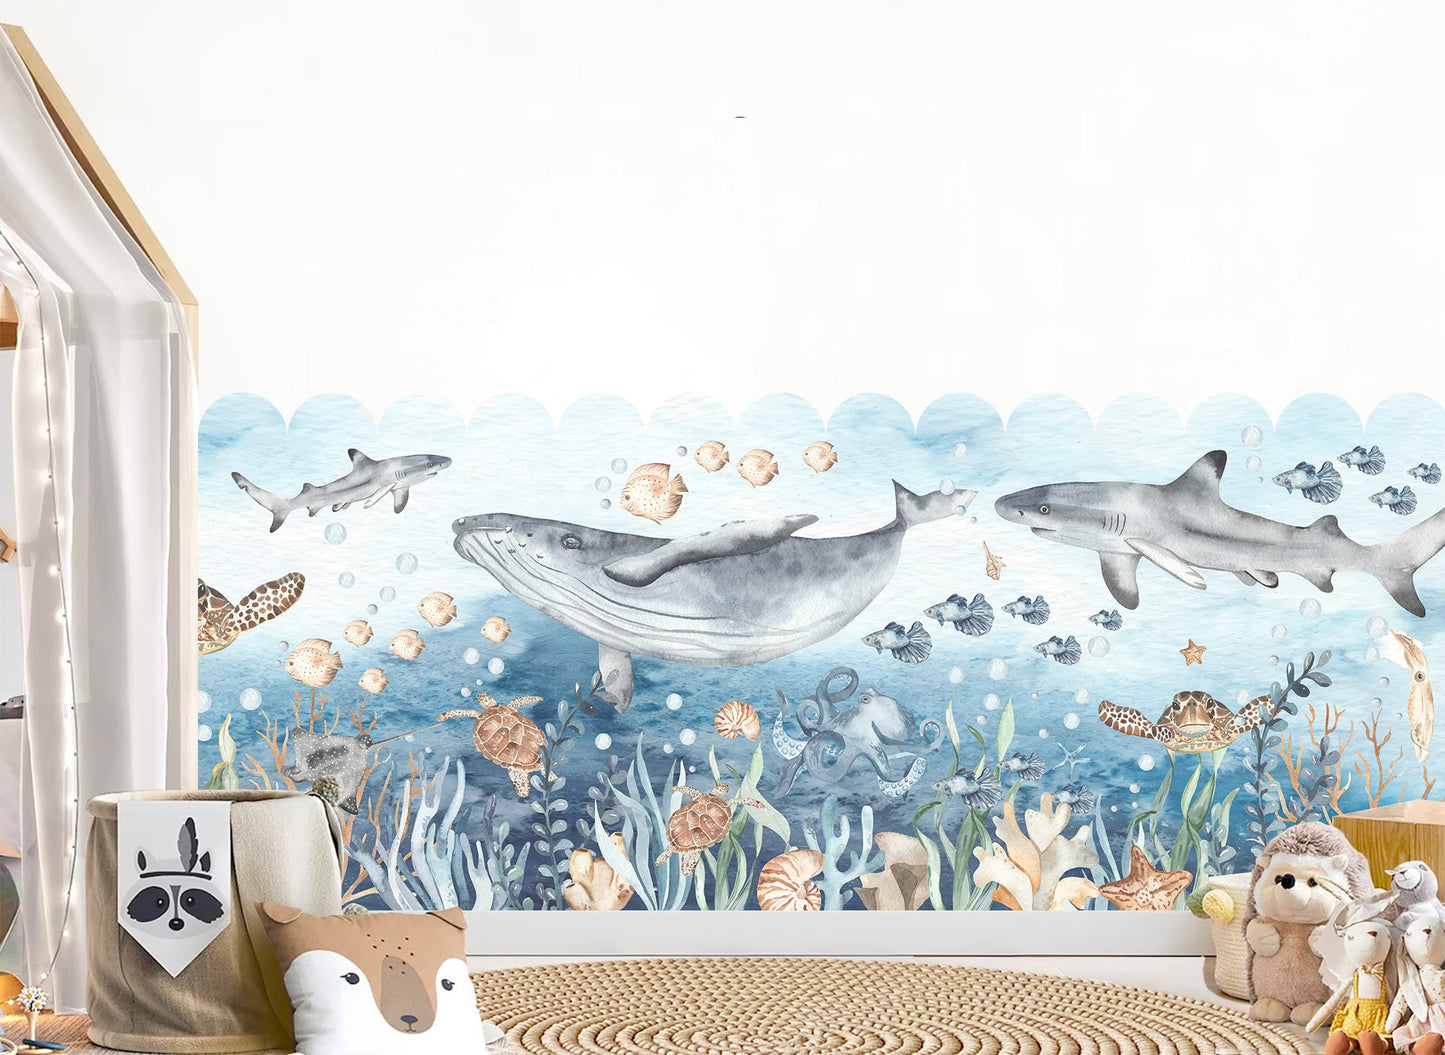 Cartoon Undersea Fabric Wall Mural - Free-Spirited Ocean Creatures: Whales, Turtles, Sharks, Octopuses, Beautiful Watercolor Décor - WM031